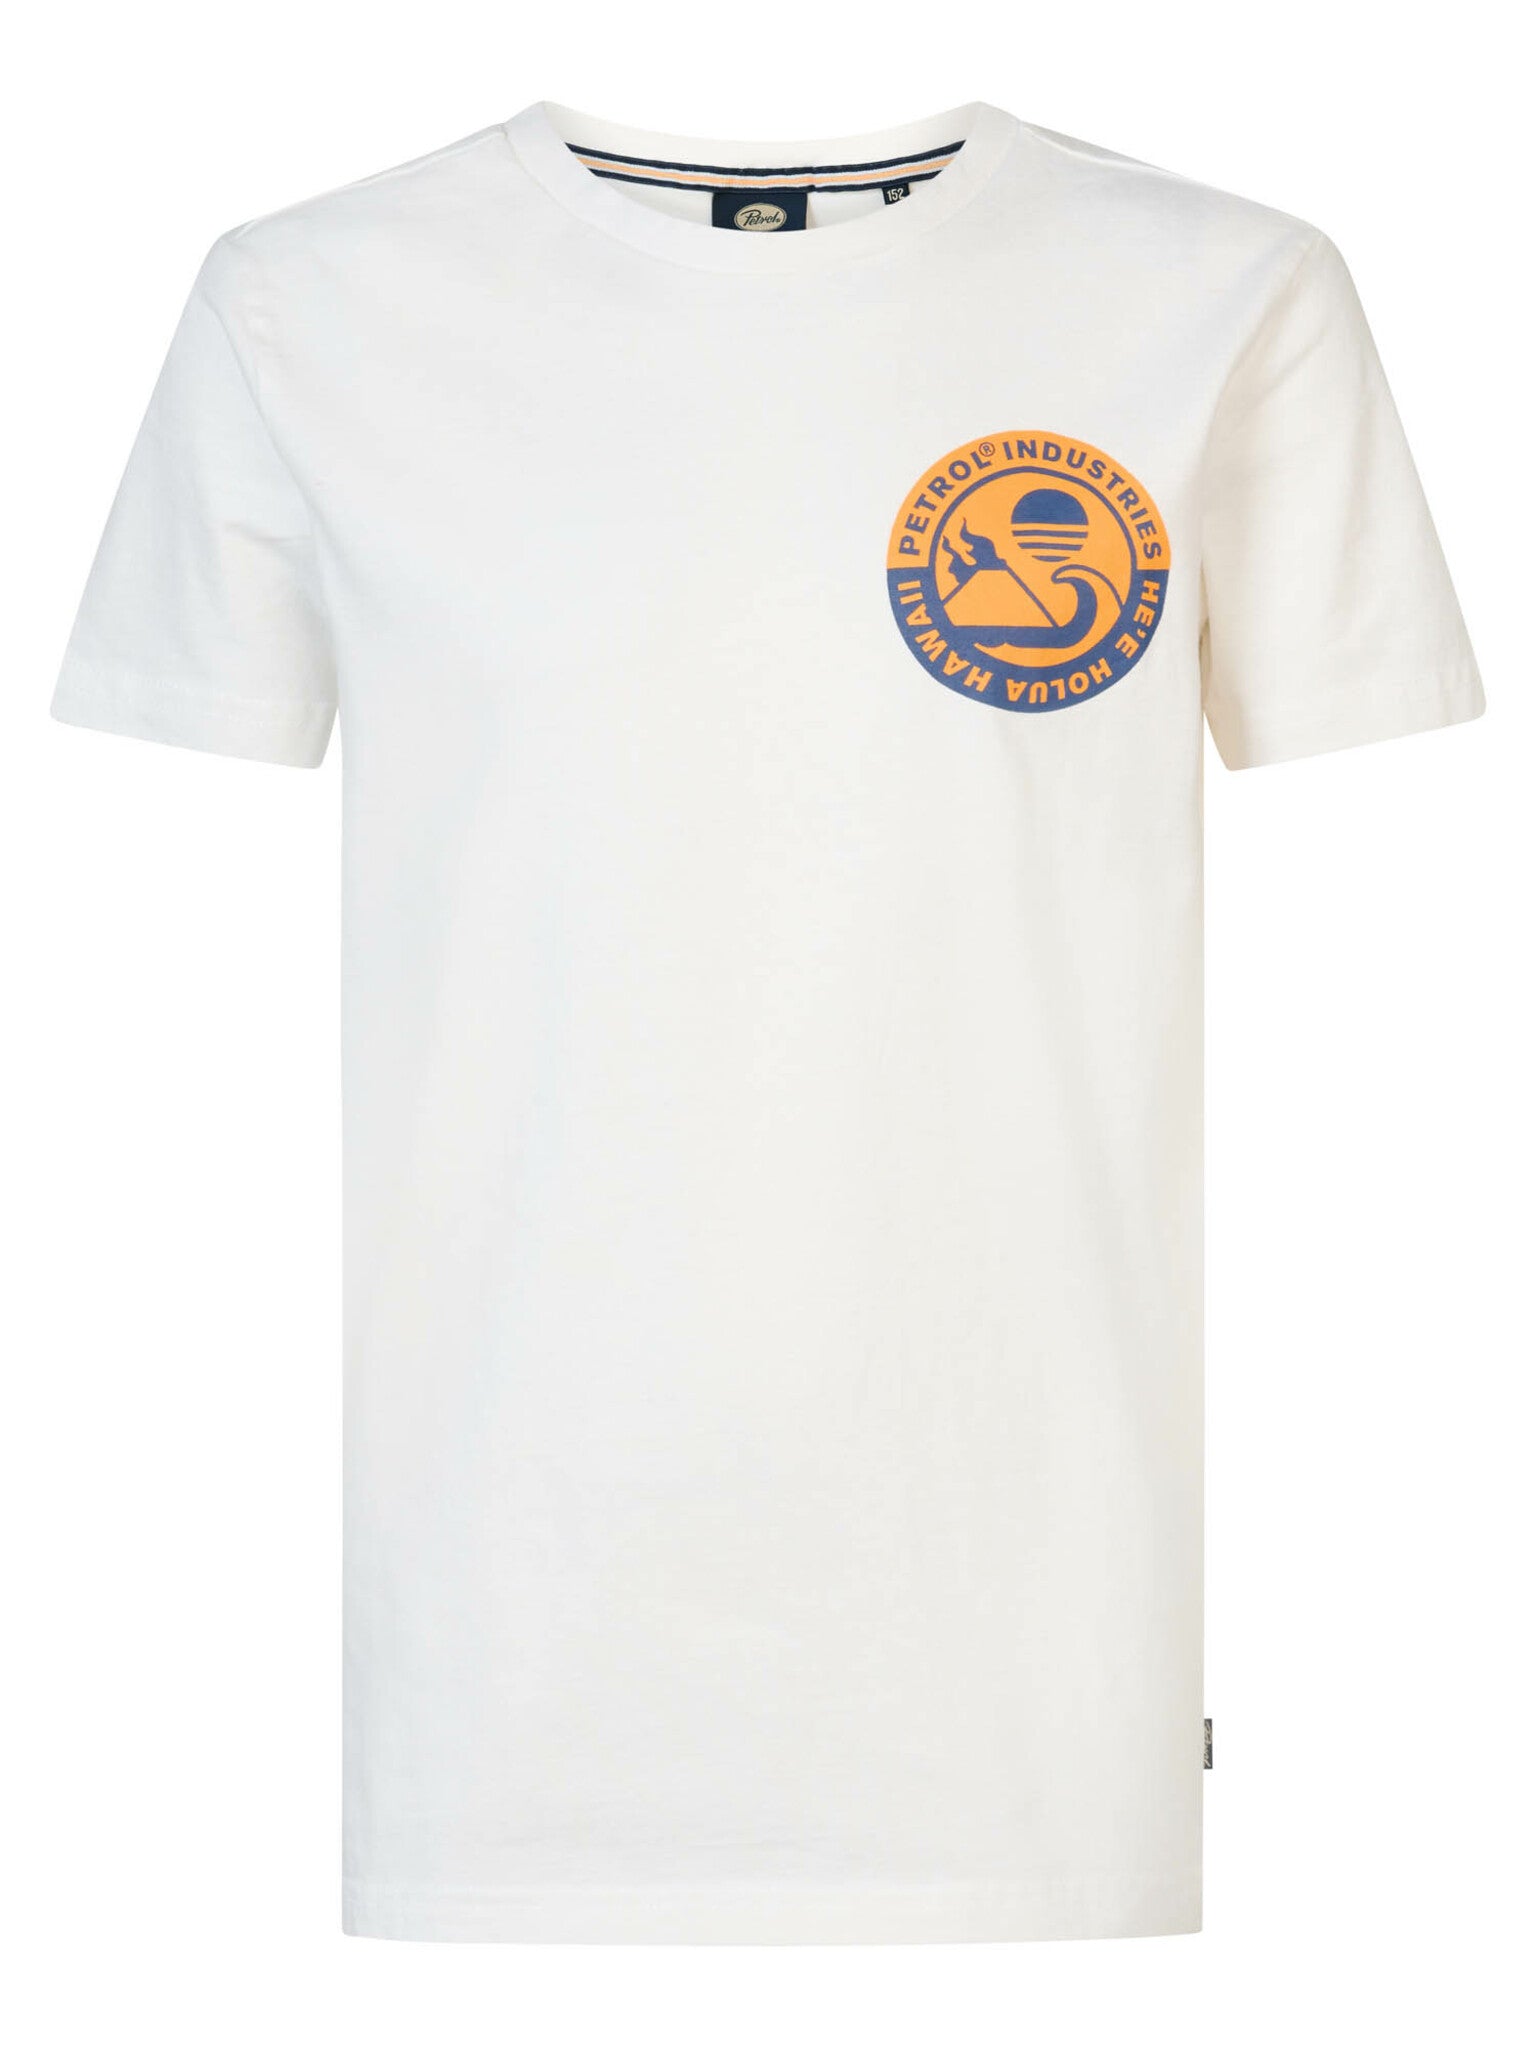 Jongens Boys T-Shirt SS Classic Print van Petrol in de kleur Bright White in maat 176.